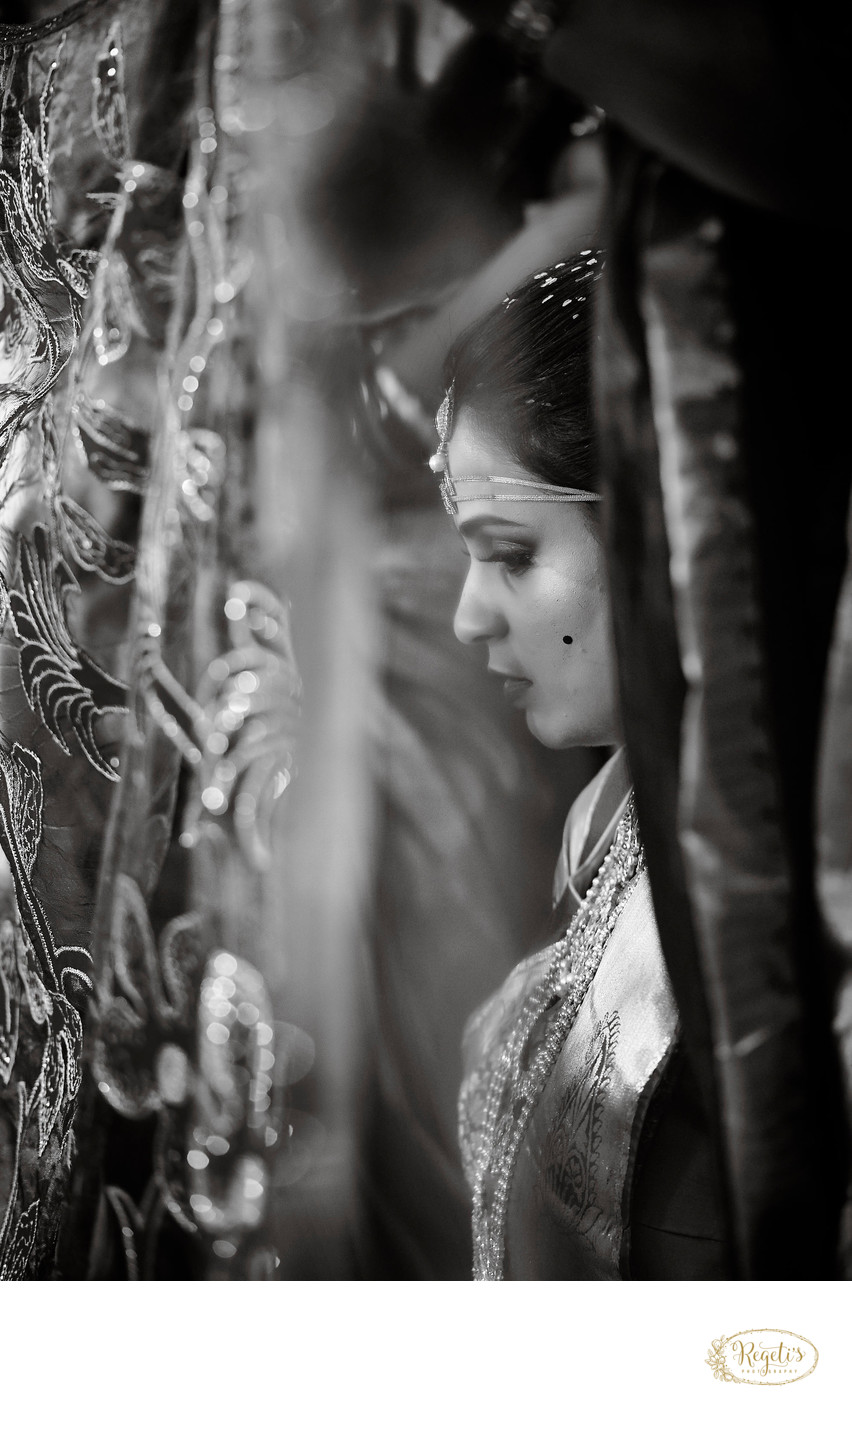 Indian Telugu bride behind a veil 